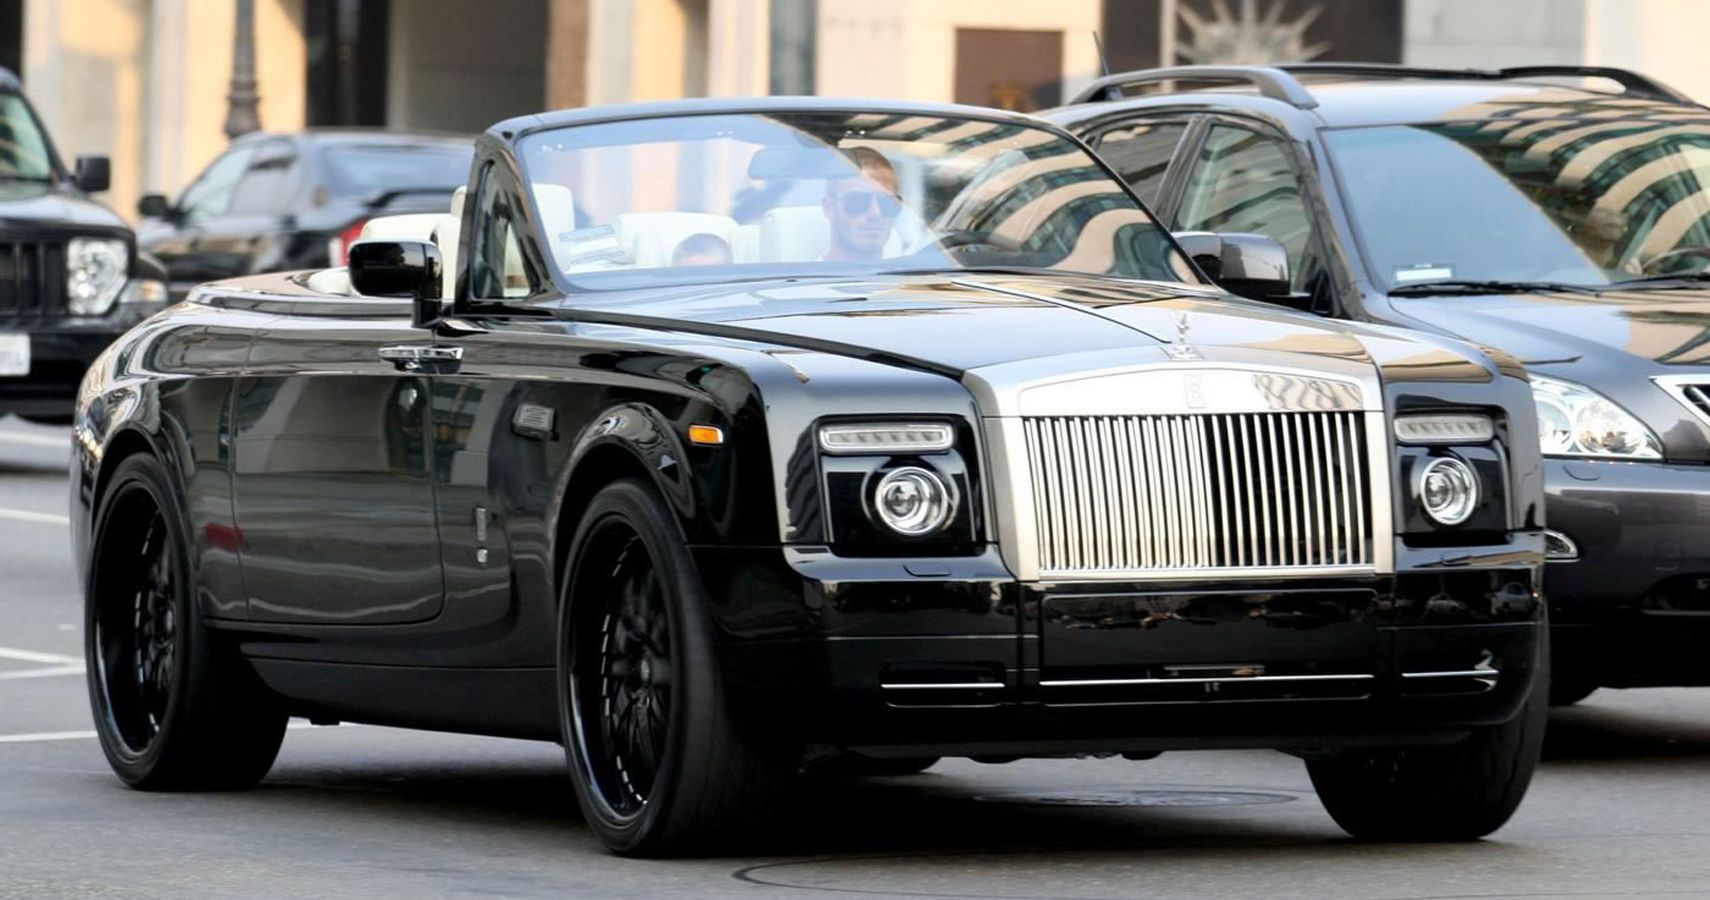 David Beckham’s Rolls-Royce Phantom Drophead Coupé